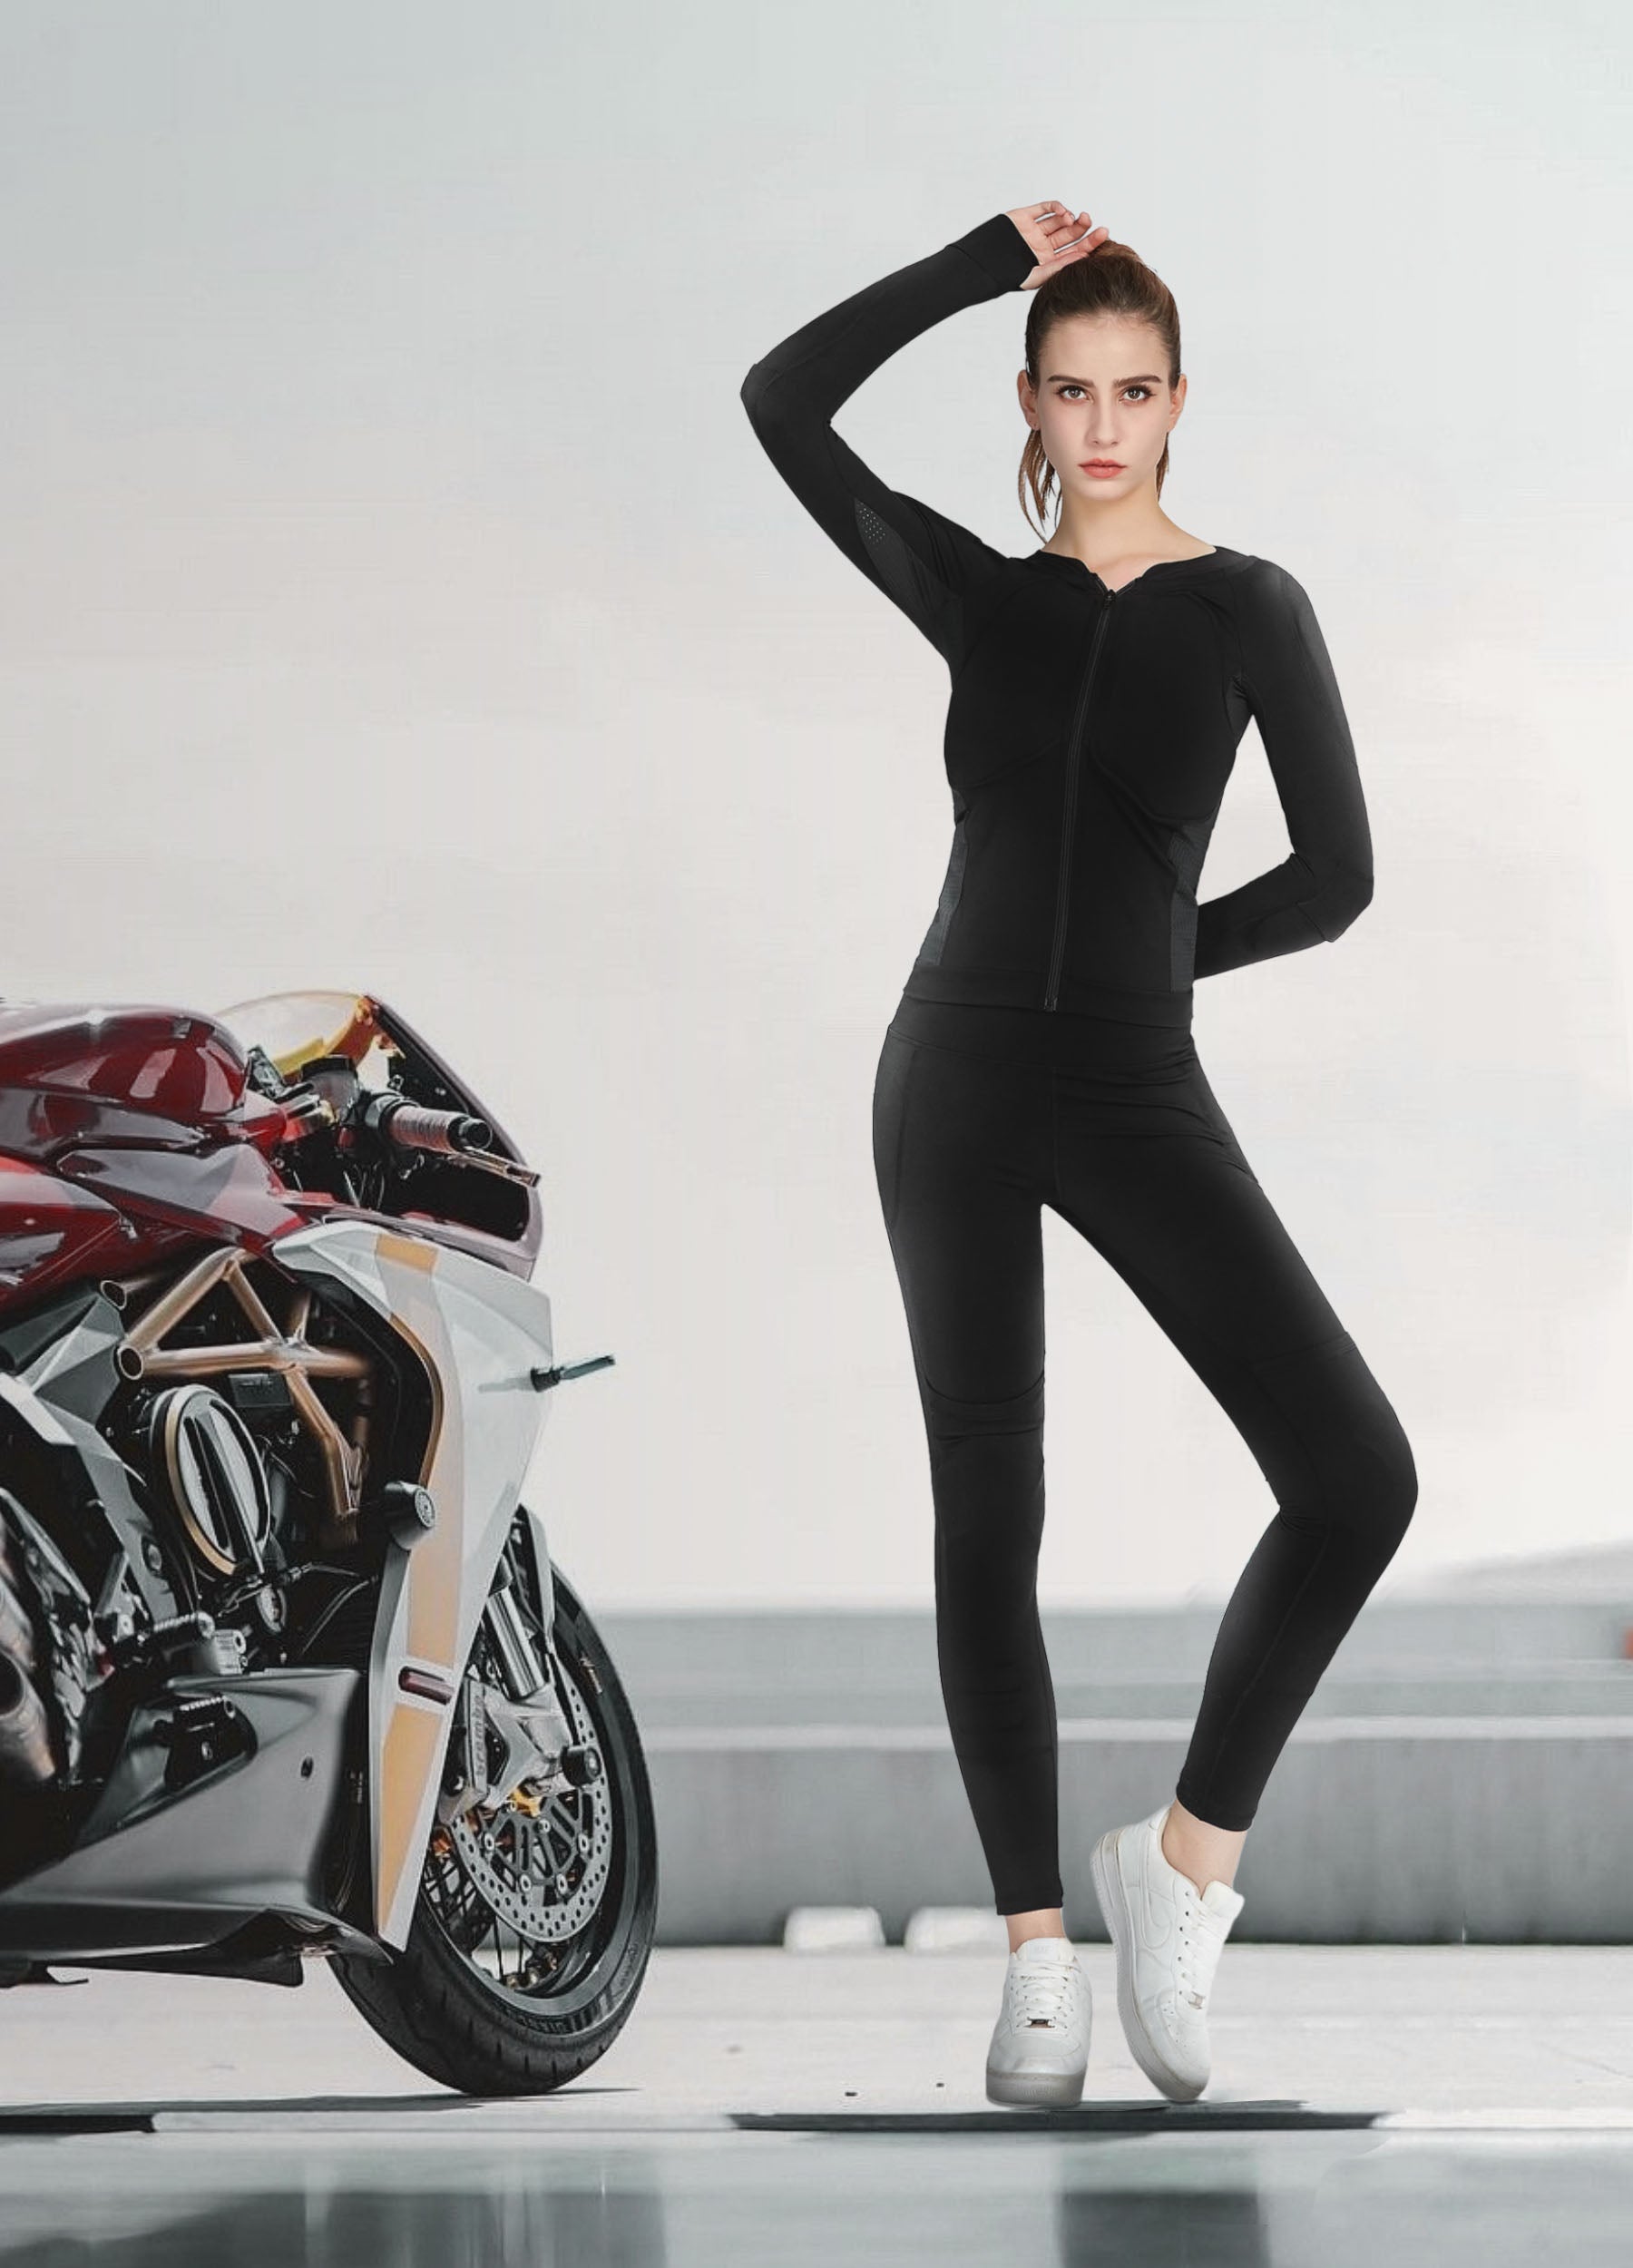 4POSE Women's Armored Riding Gear Dirt Bike Suits E-Biker Suit Protective  Gear